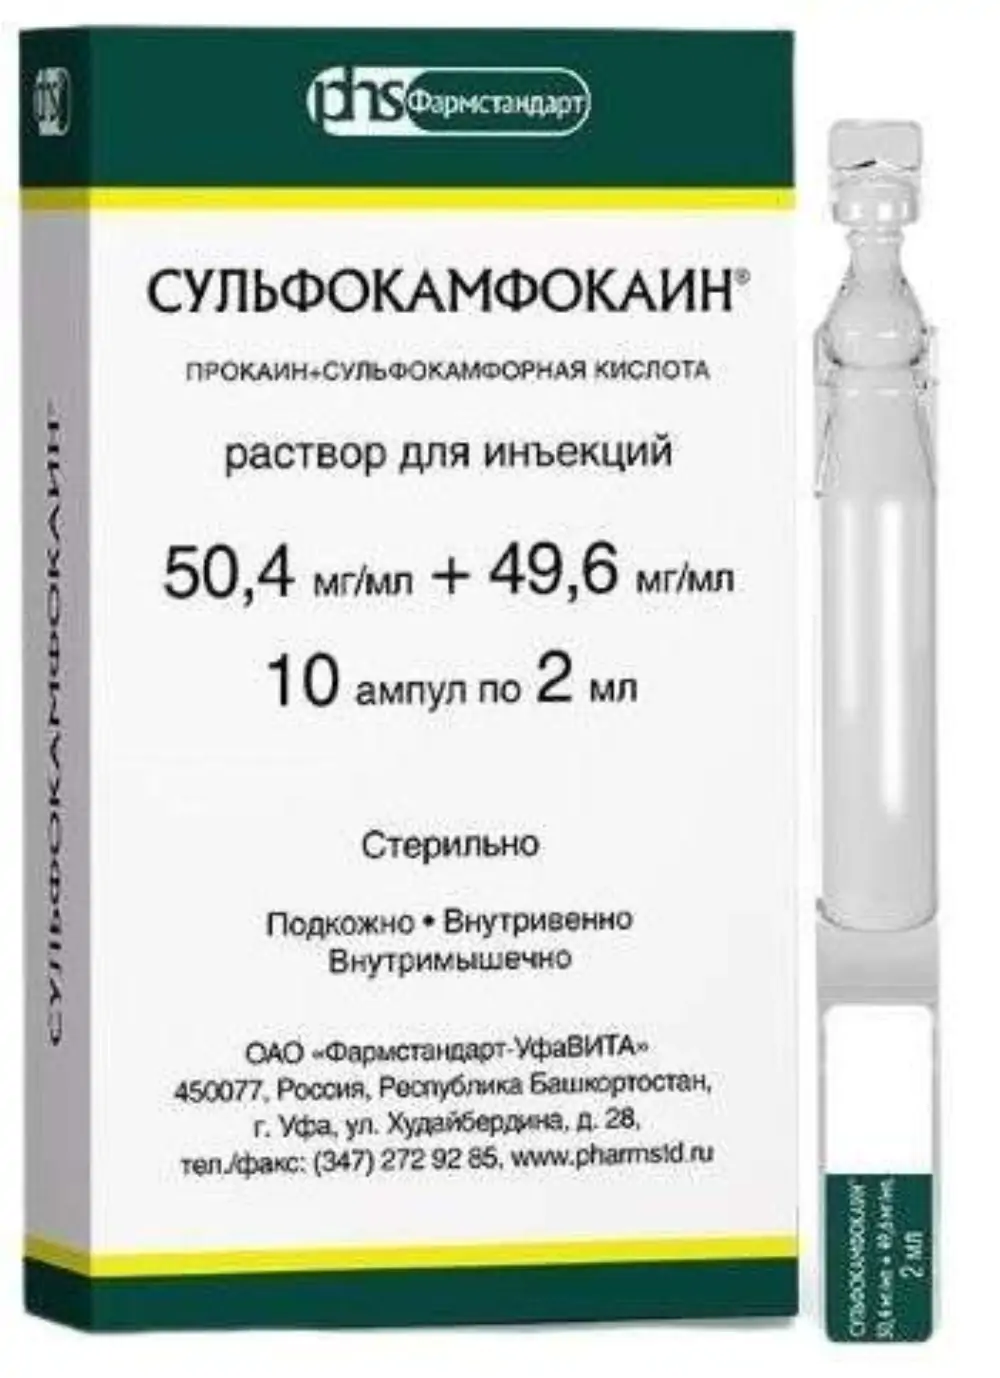 Сульфокамфокаин 10% р-р 2мл амп №10 - фото 2